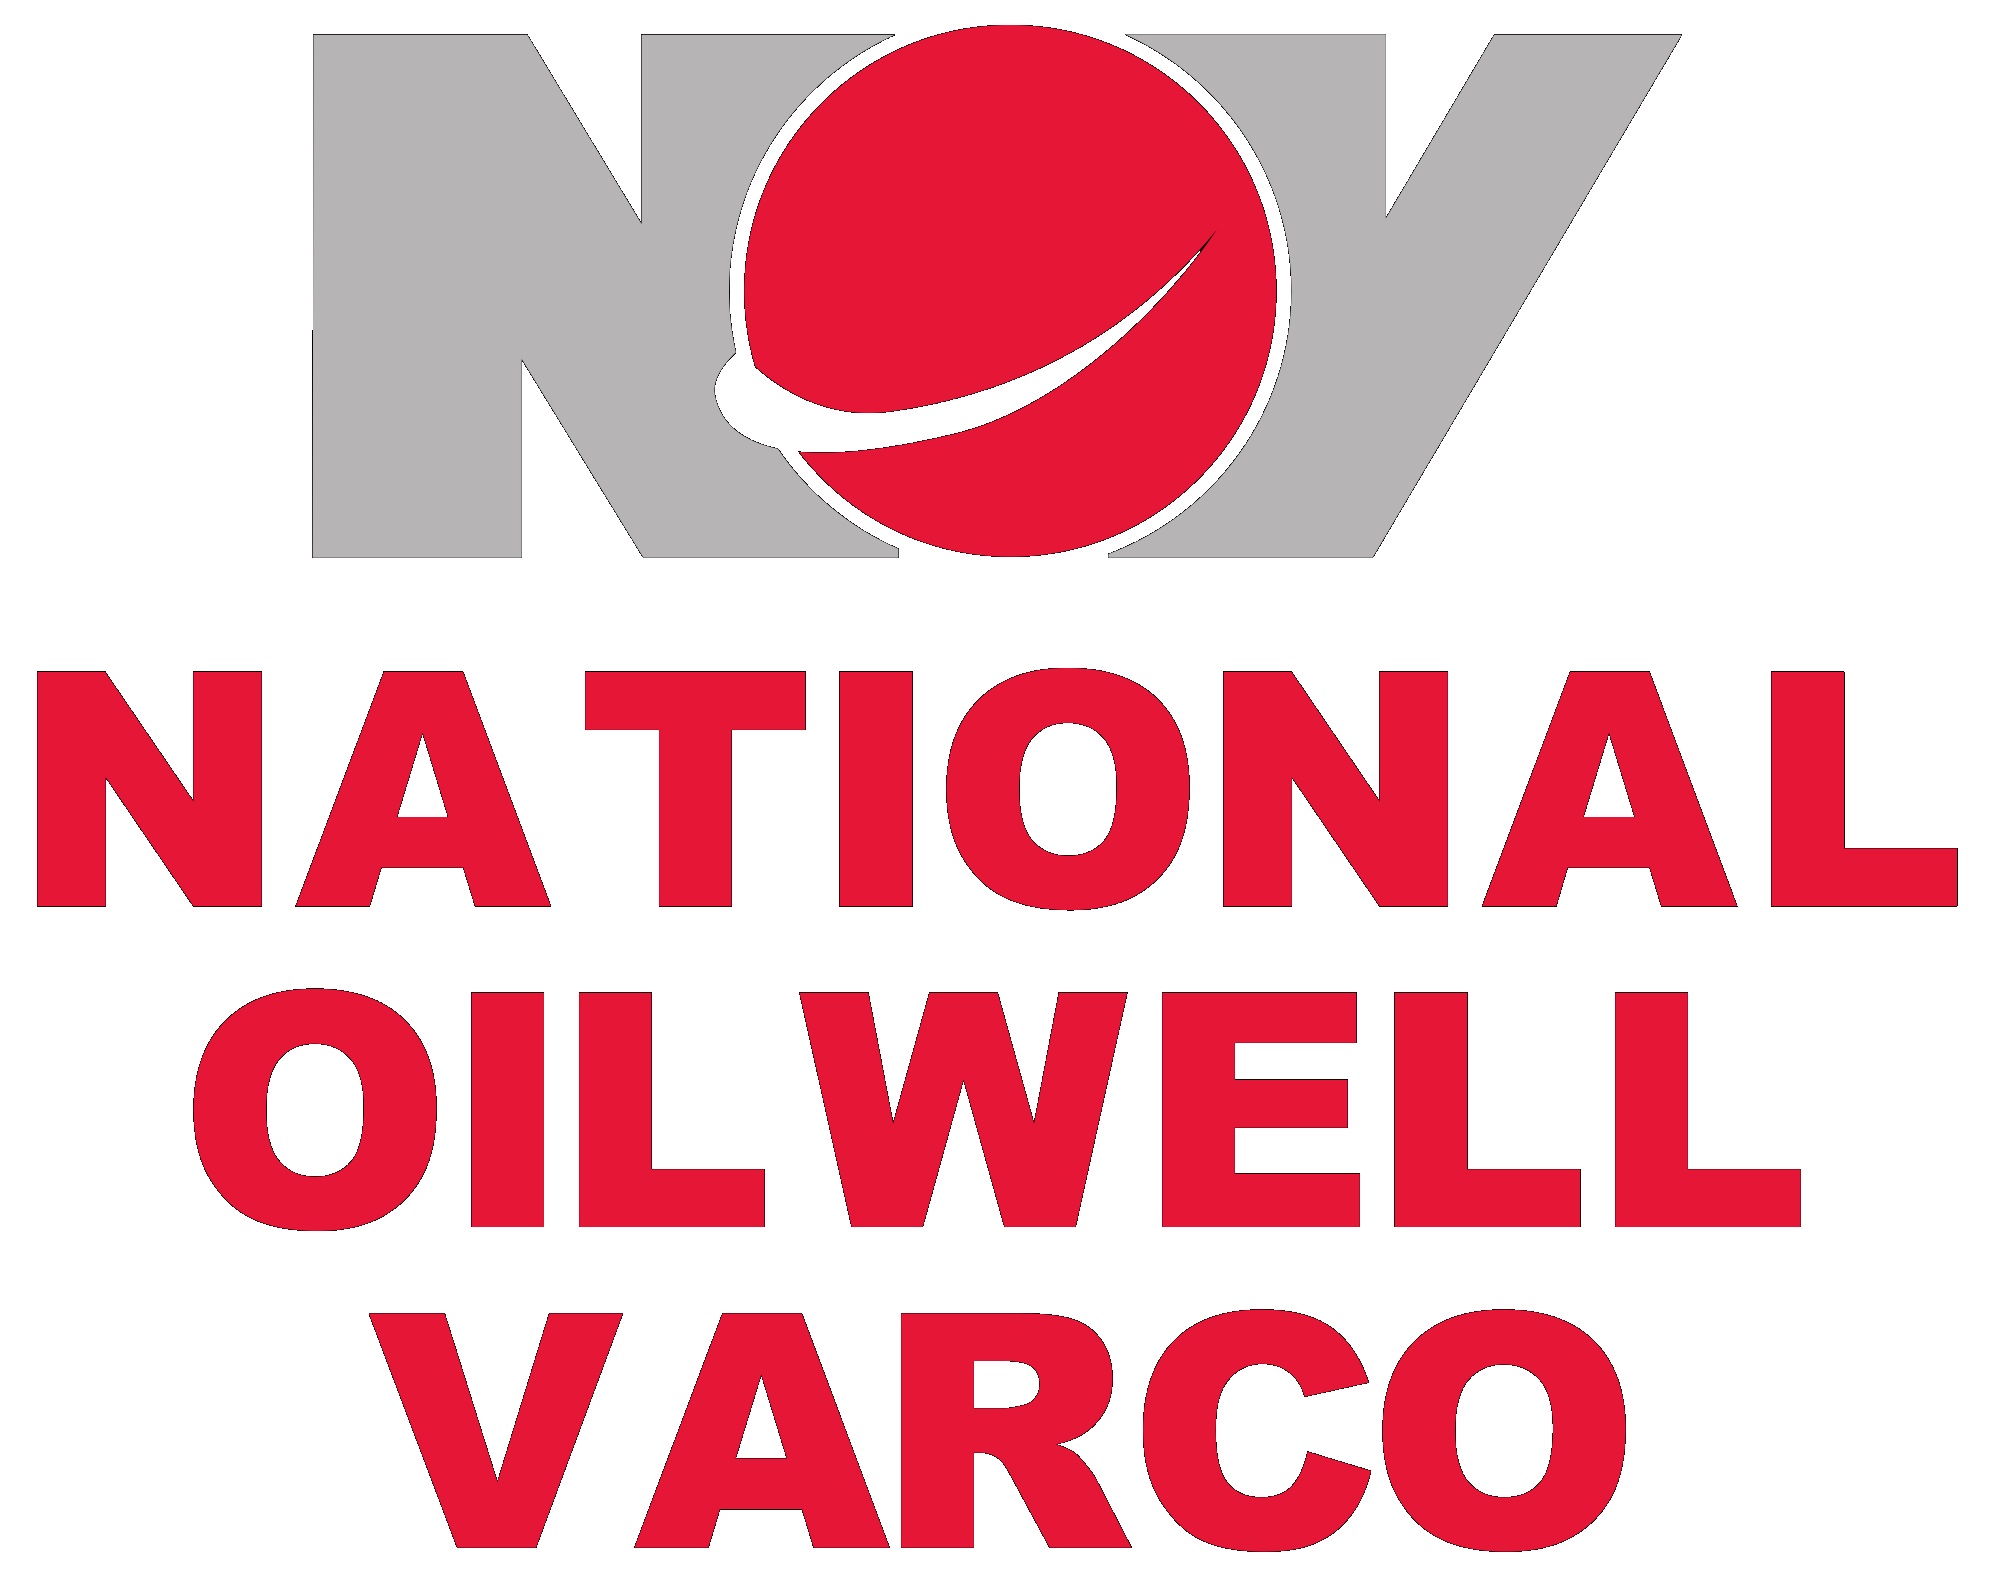 National oilwell varco jobs uk